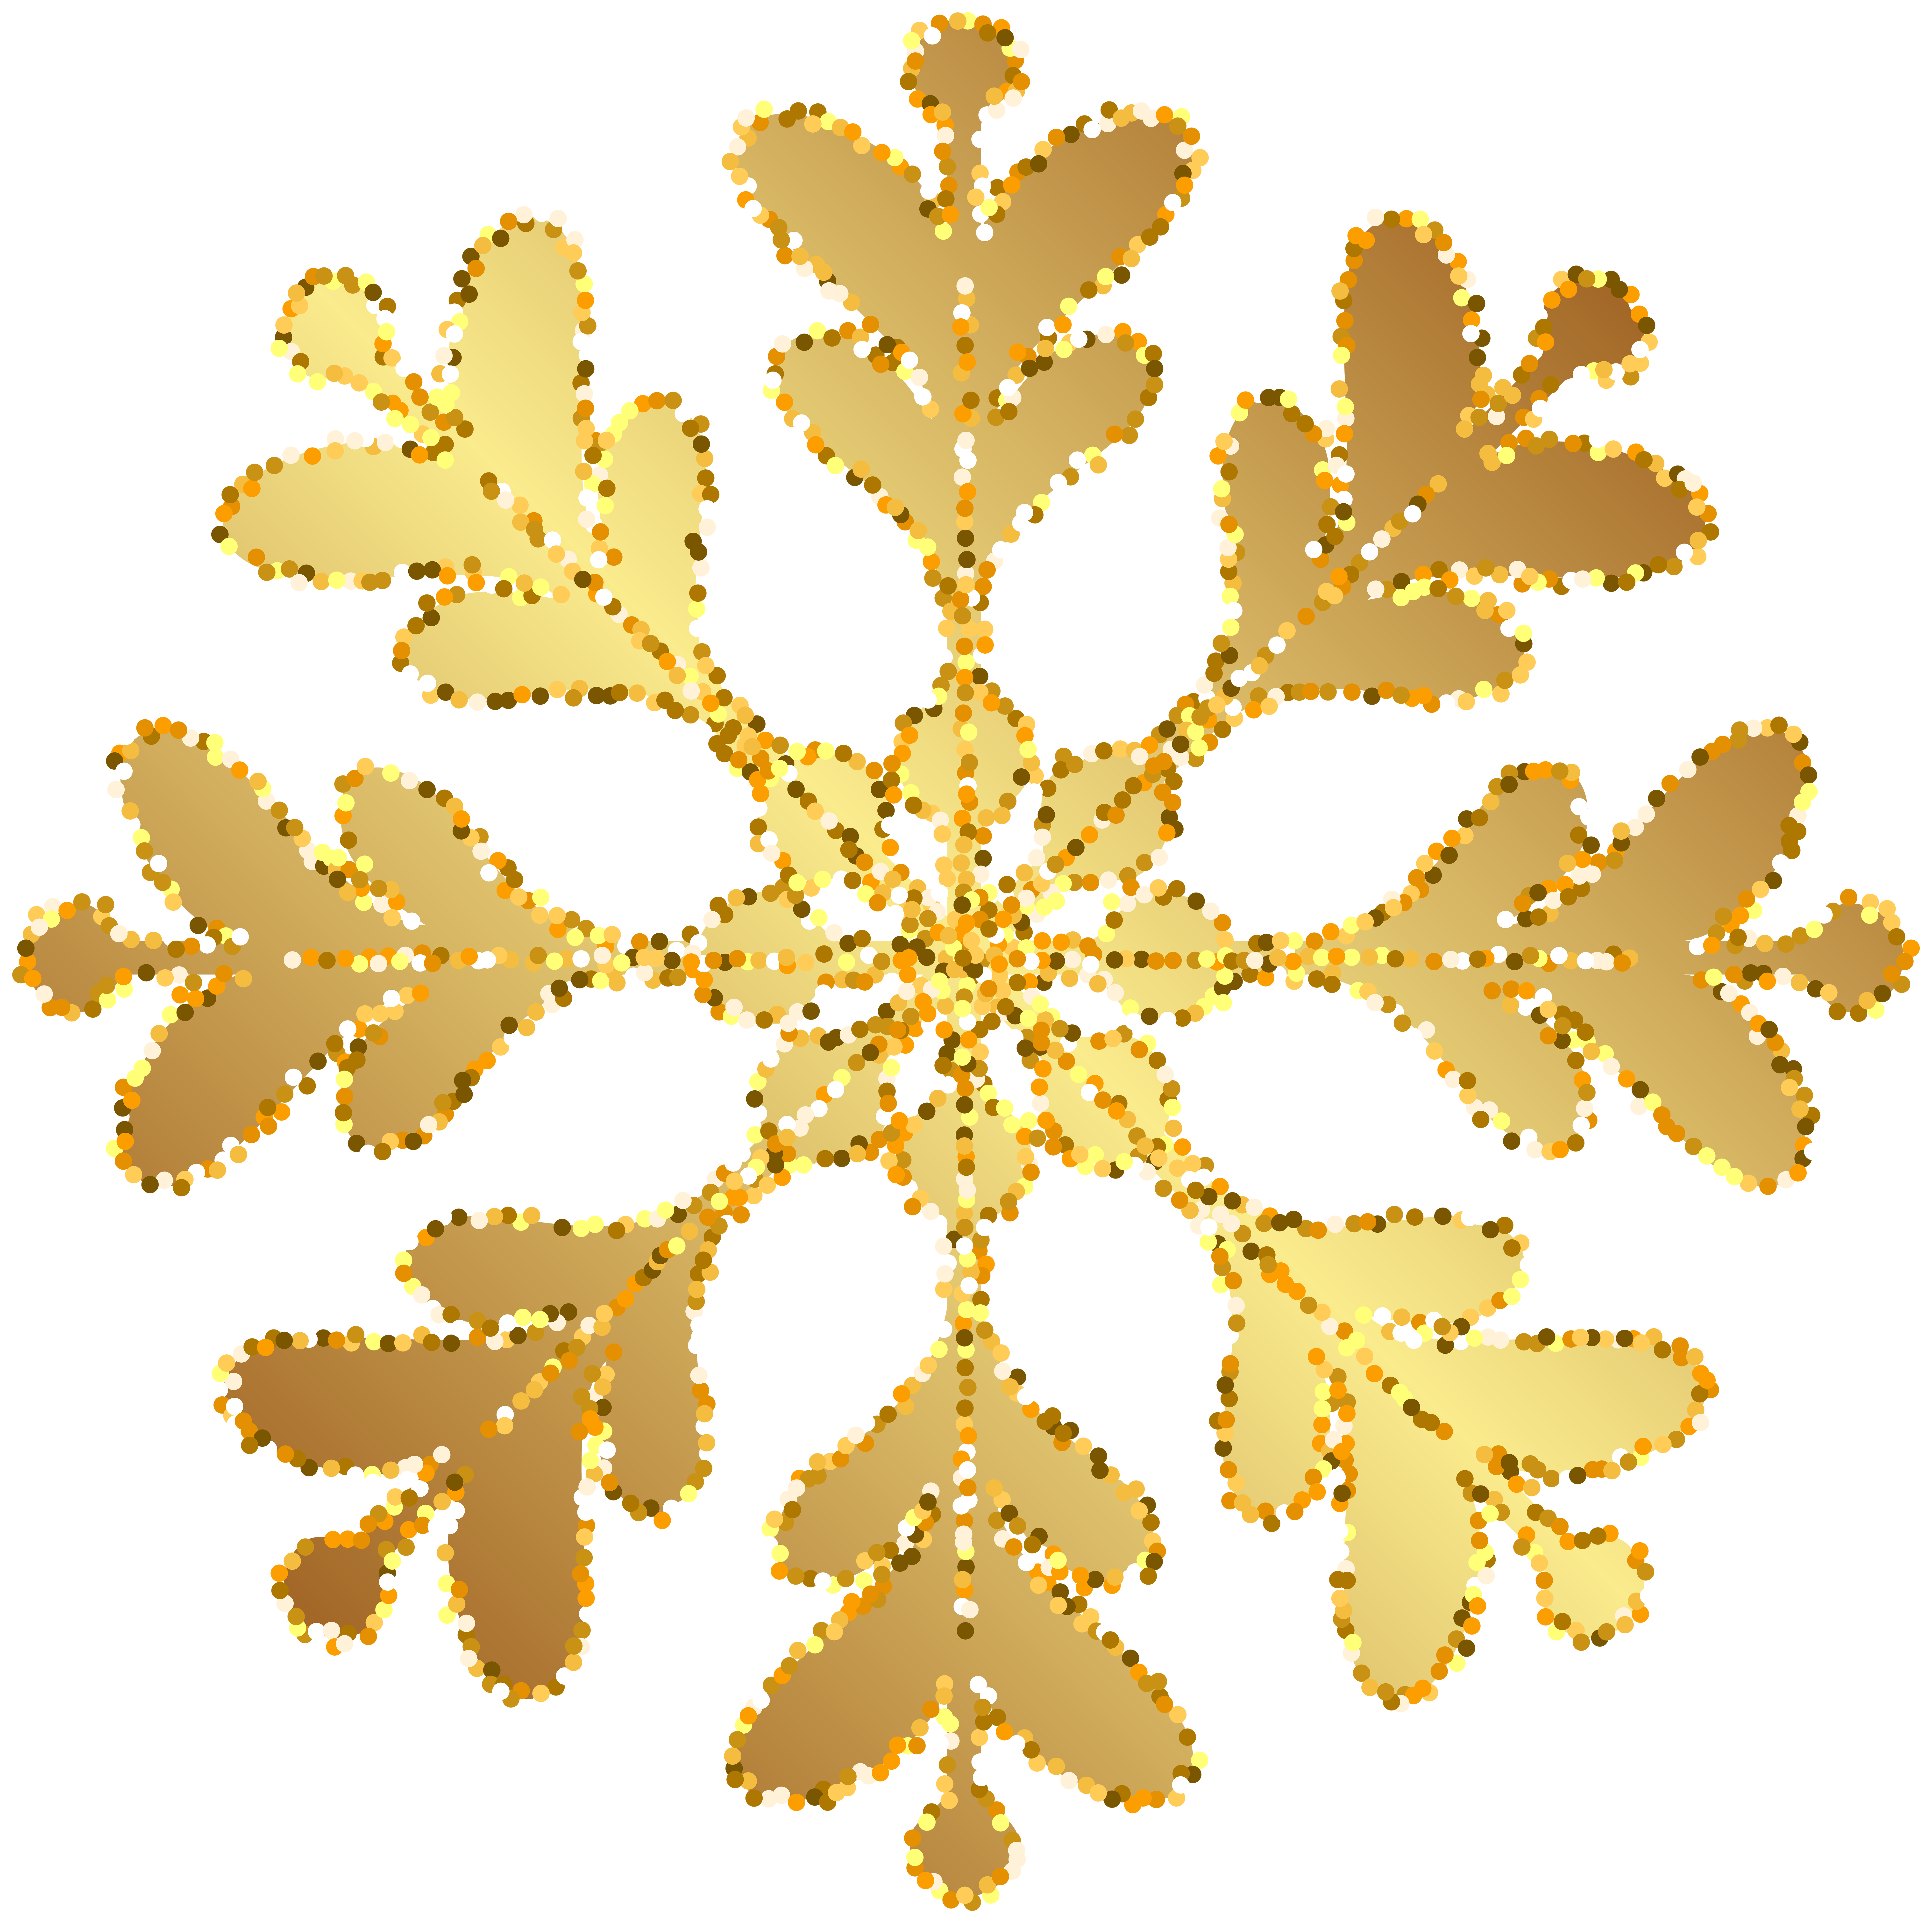 Gold Snowflake Transparent Clip Art Image